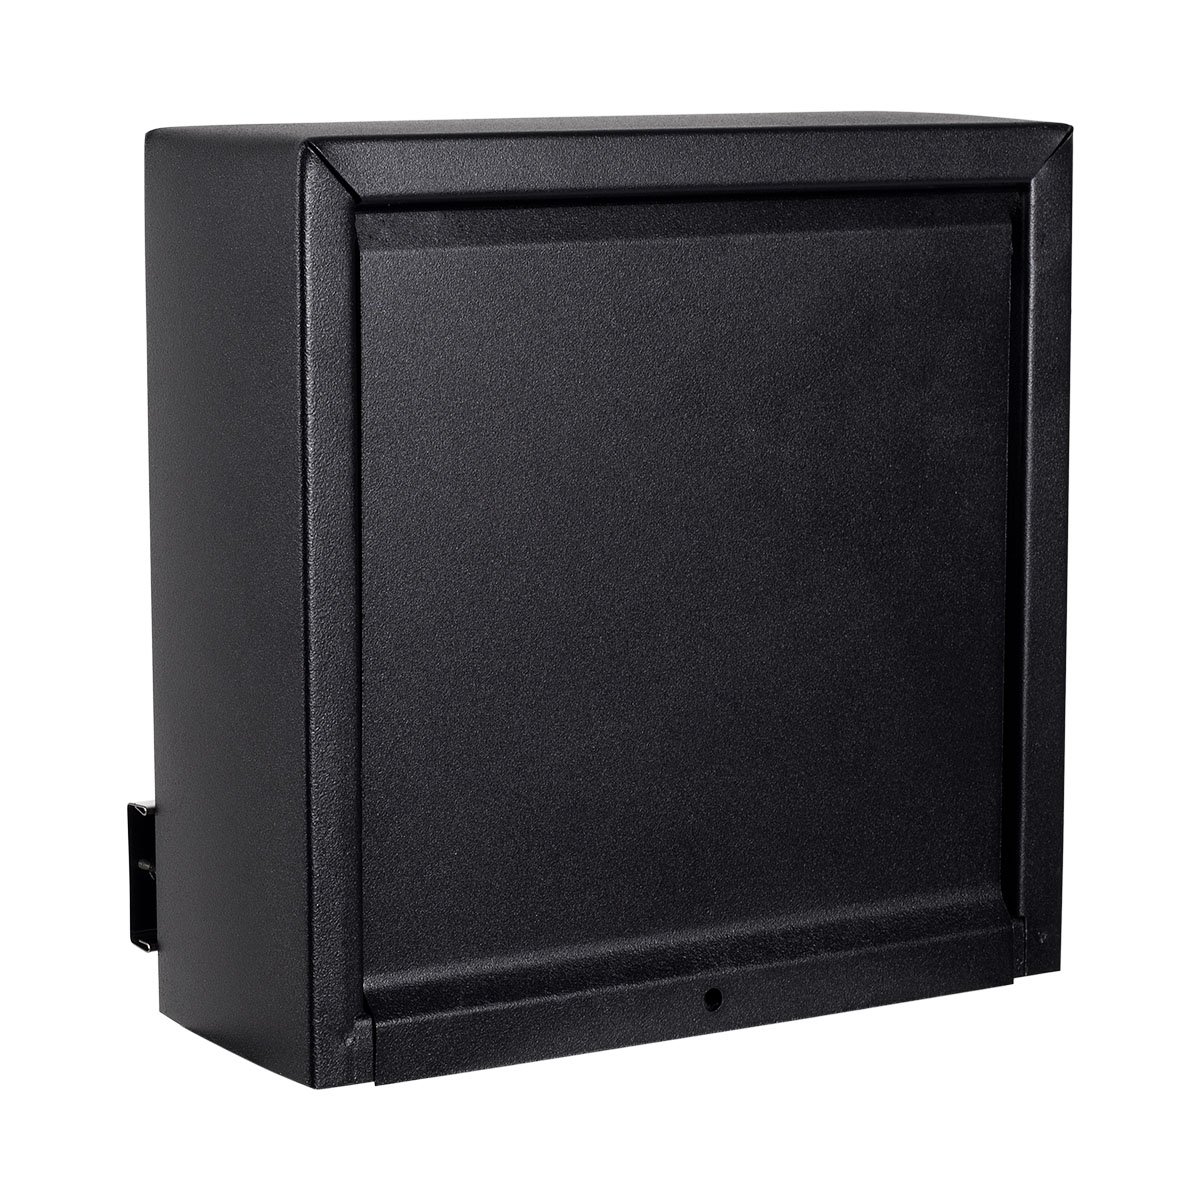 Caixa De Correio Grade horizontal Preto Fosco Tarja Inox Top moderna - 5